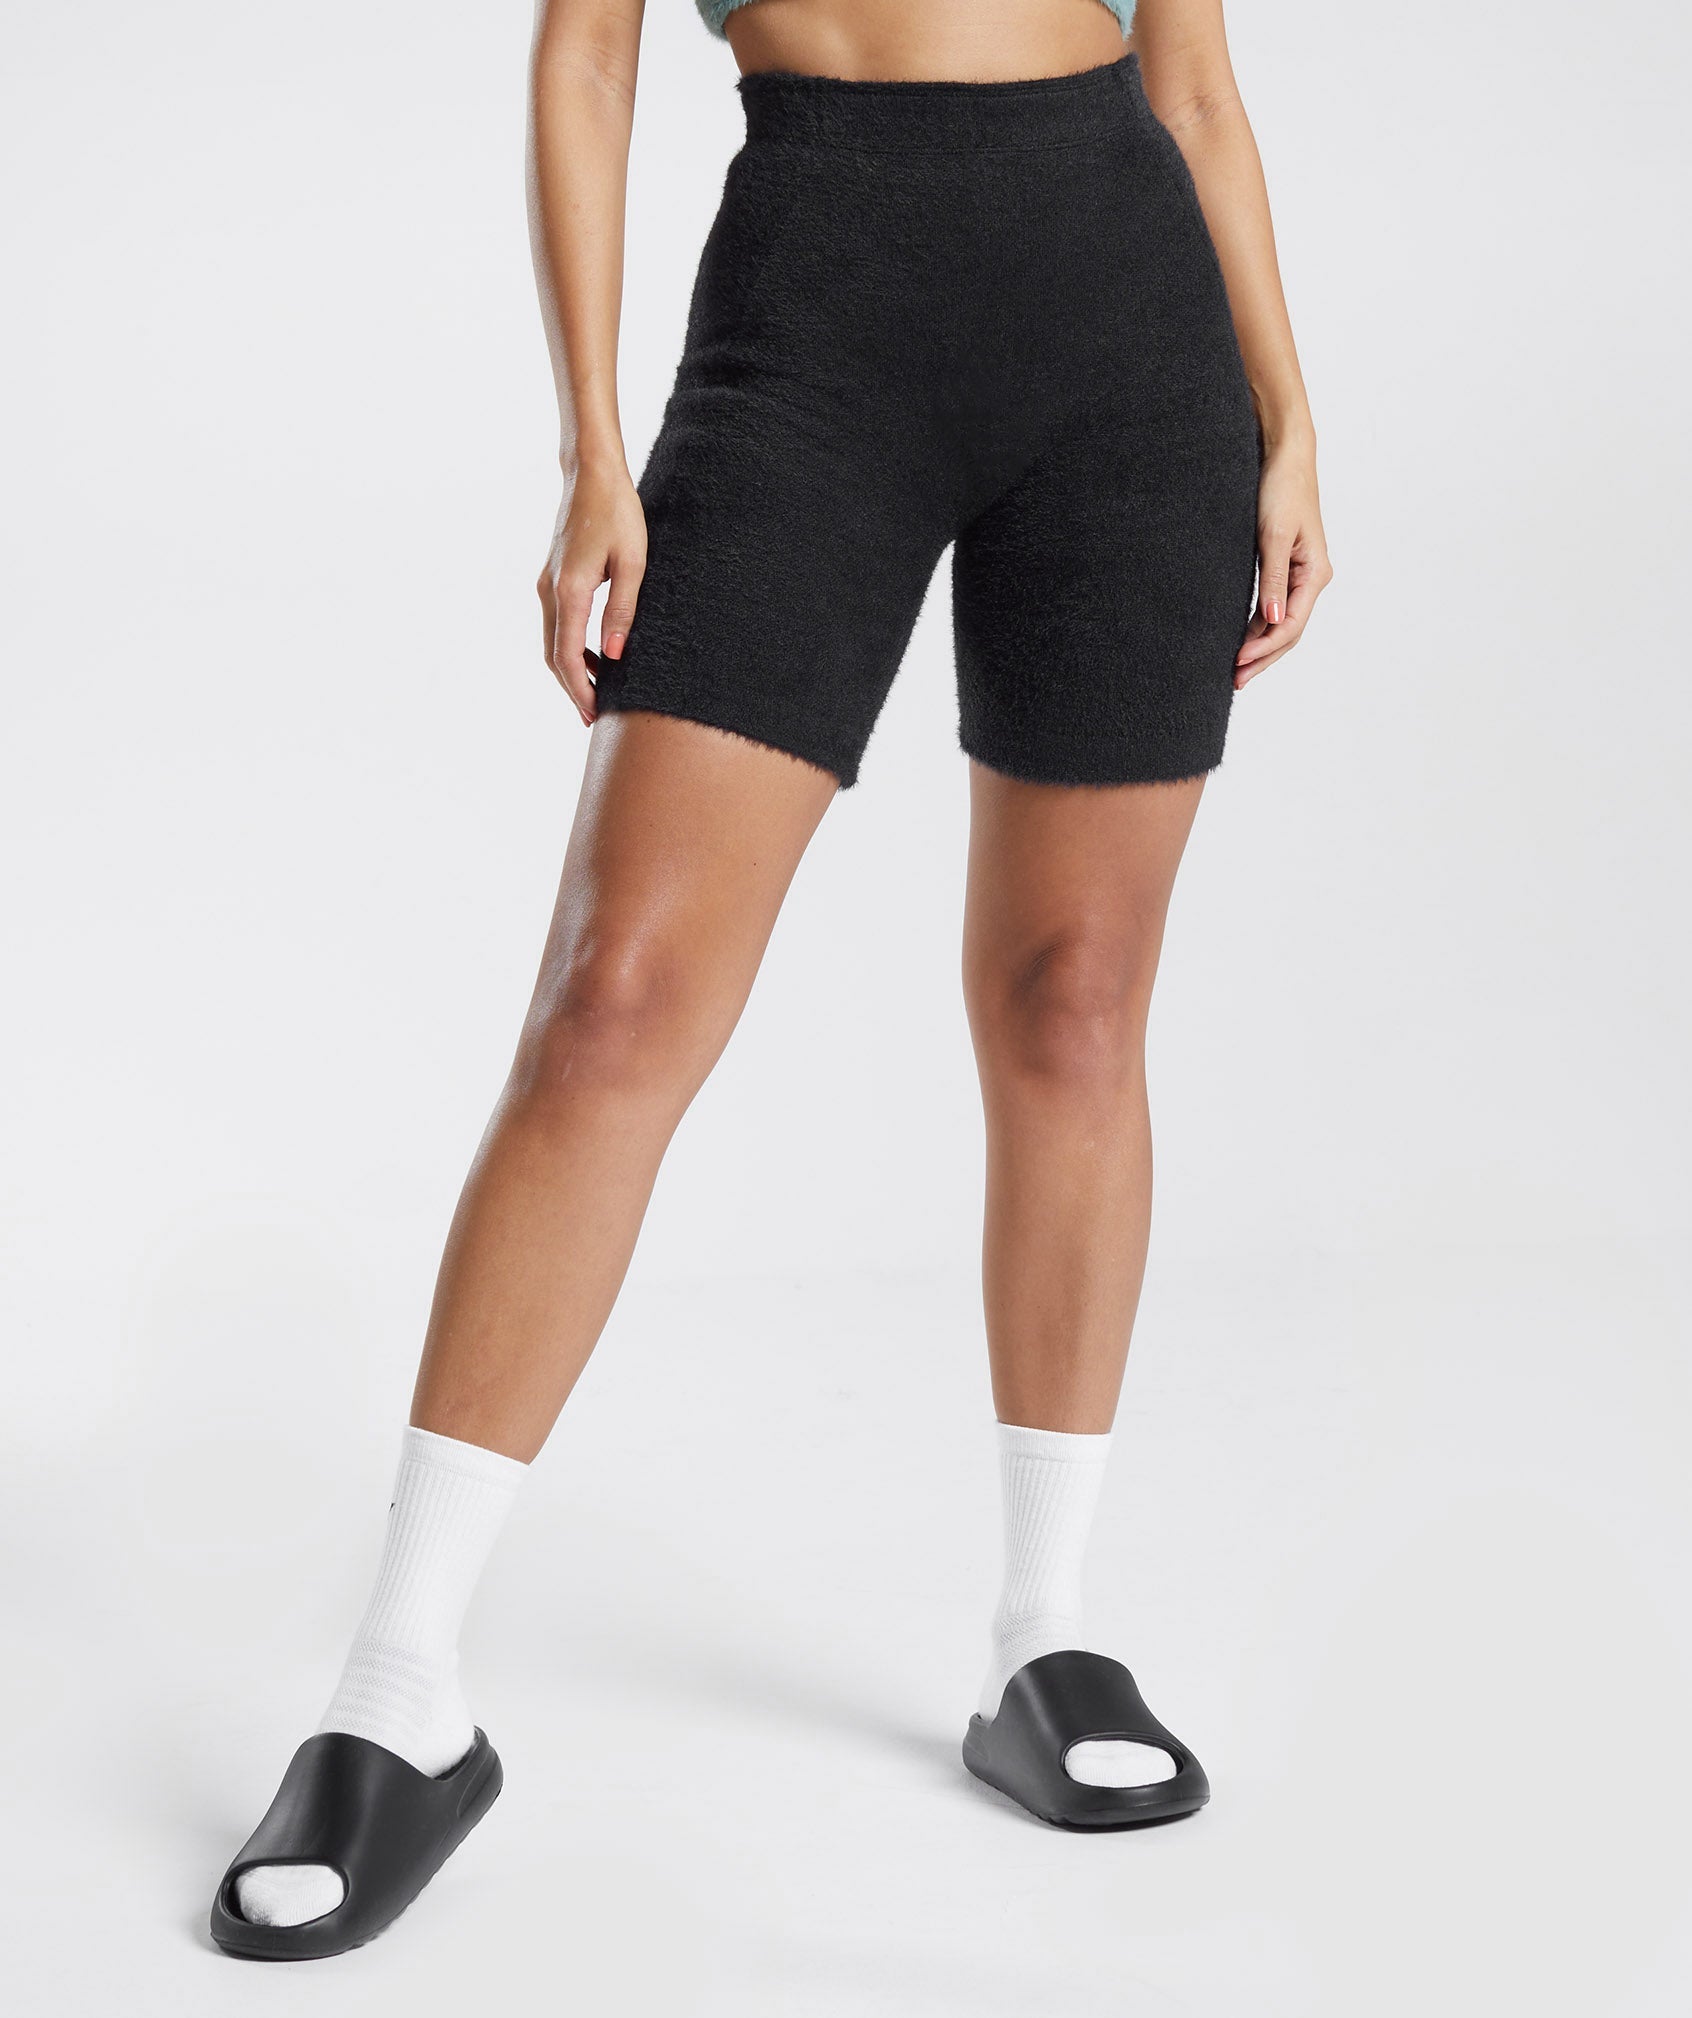 Gymshark Whitney Eyelash Knit Shorts - Black